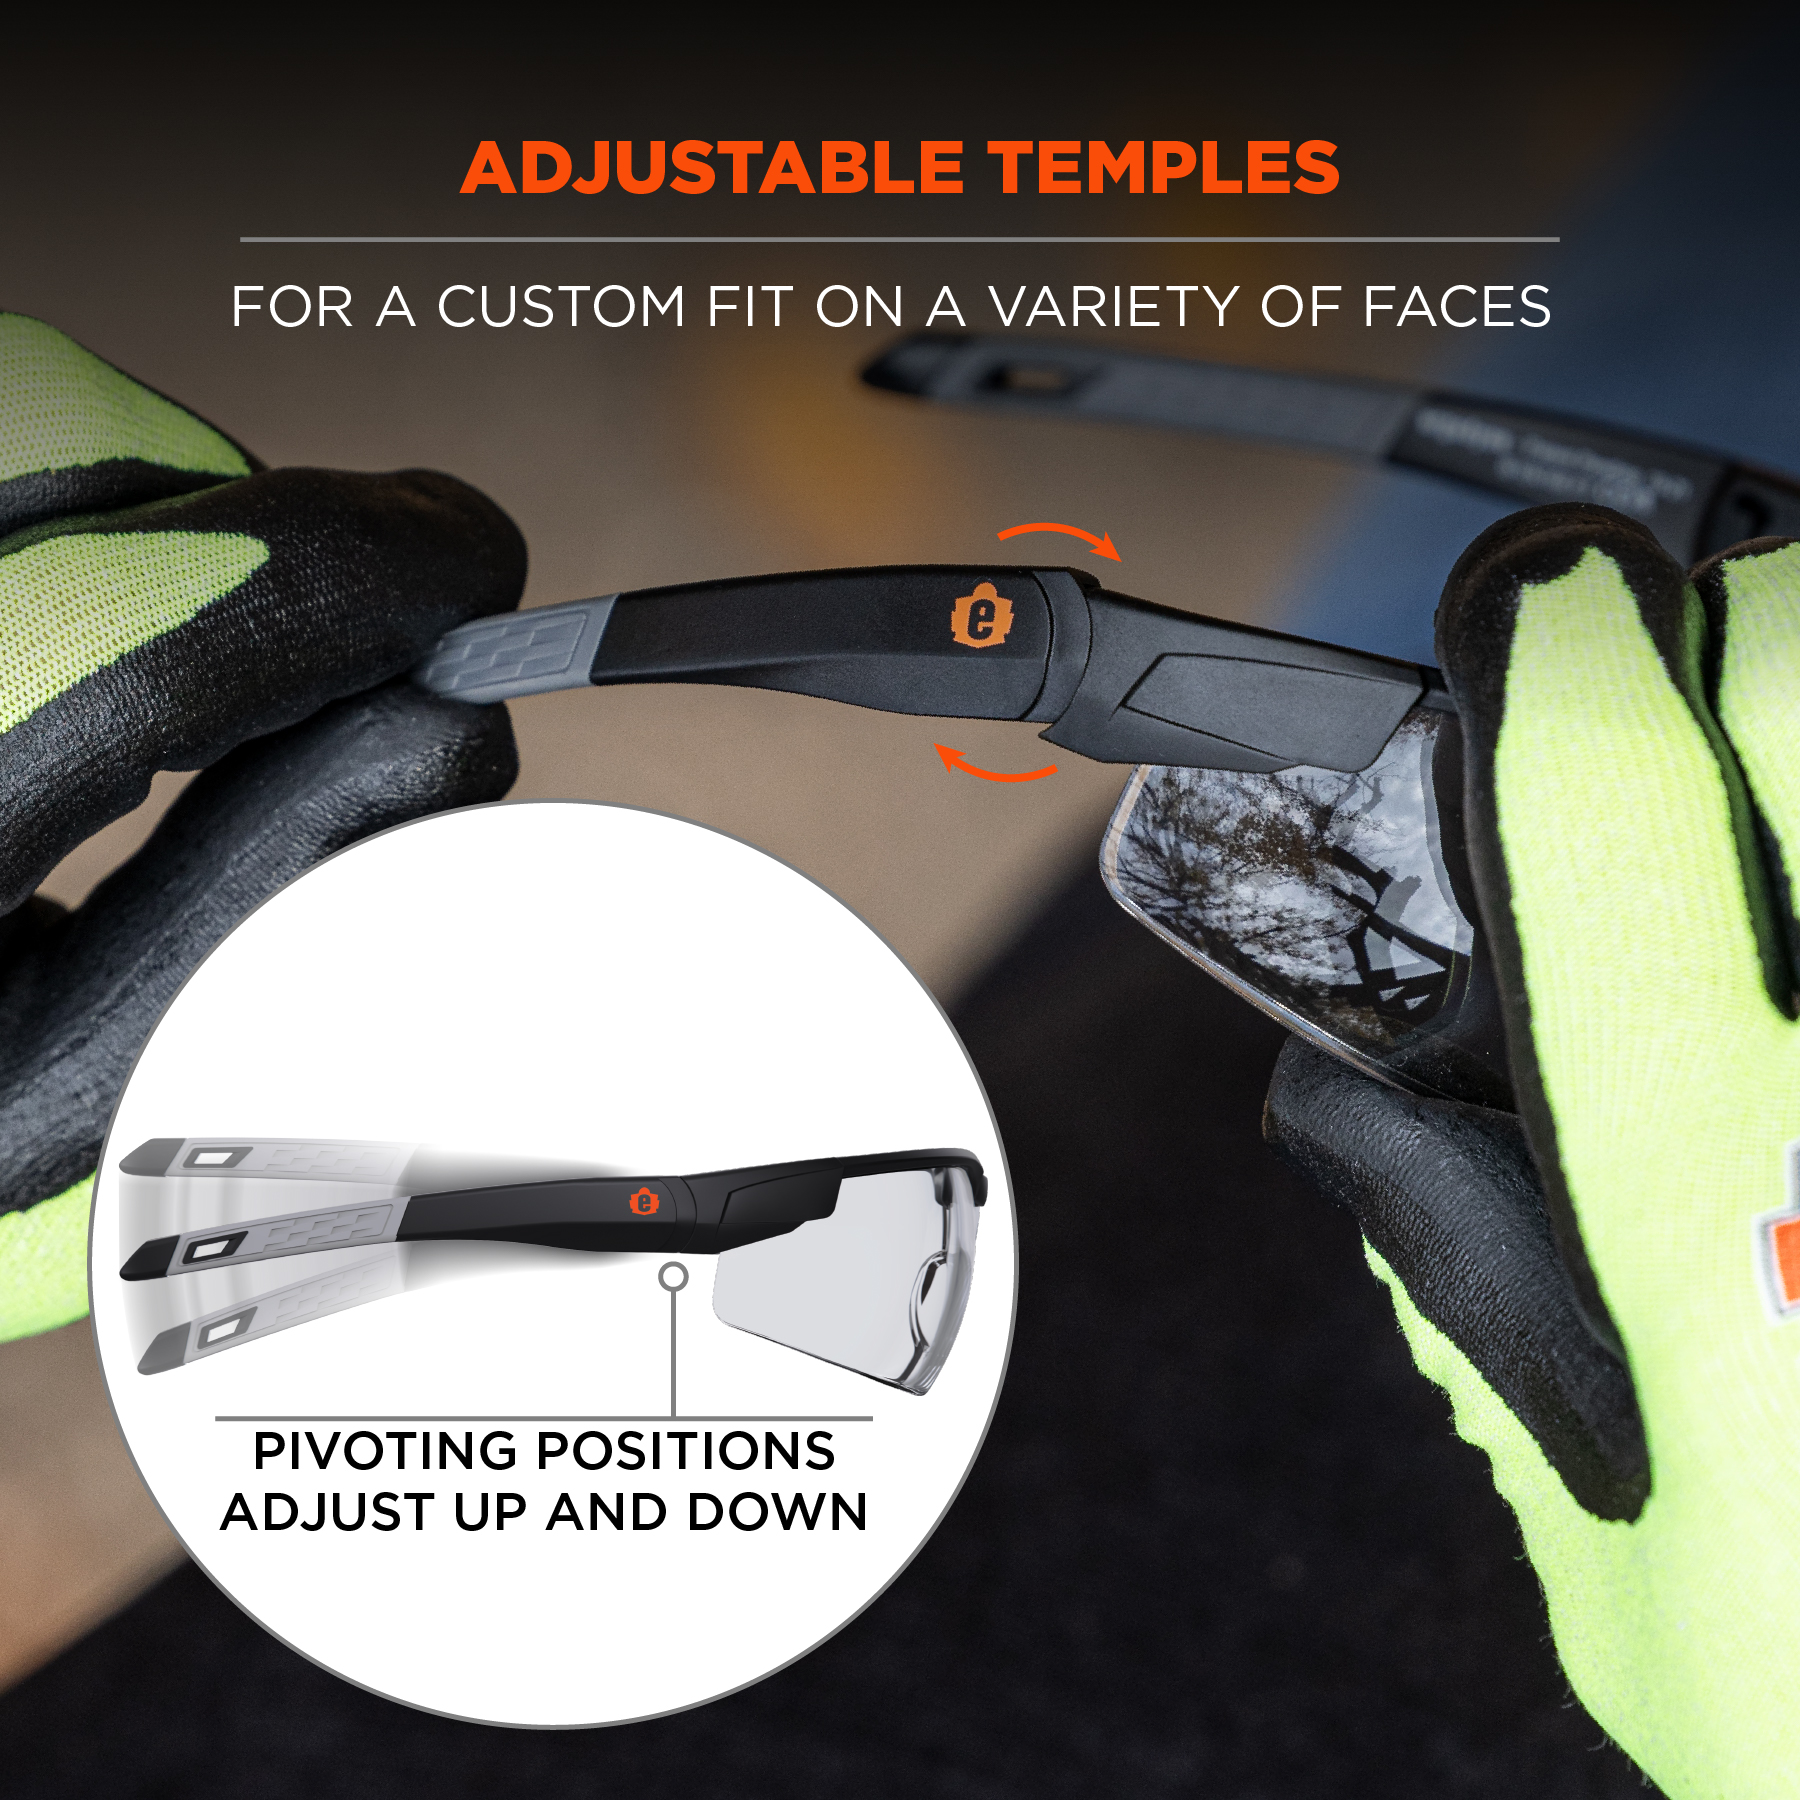 Dellenger Enhanced Anti-Fog & Scratch-Resistant Safety Glasses with  Adjustable Temples